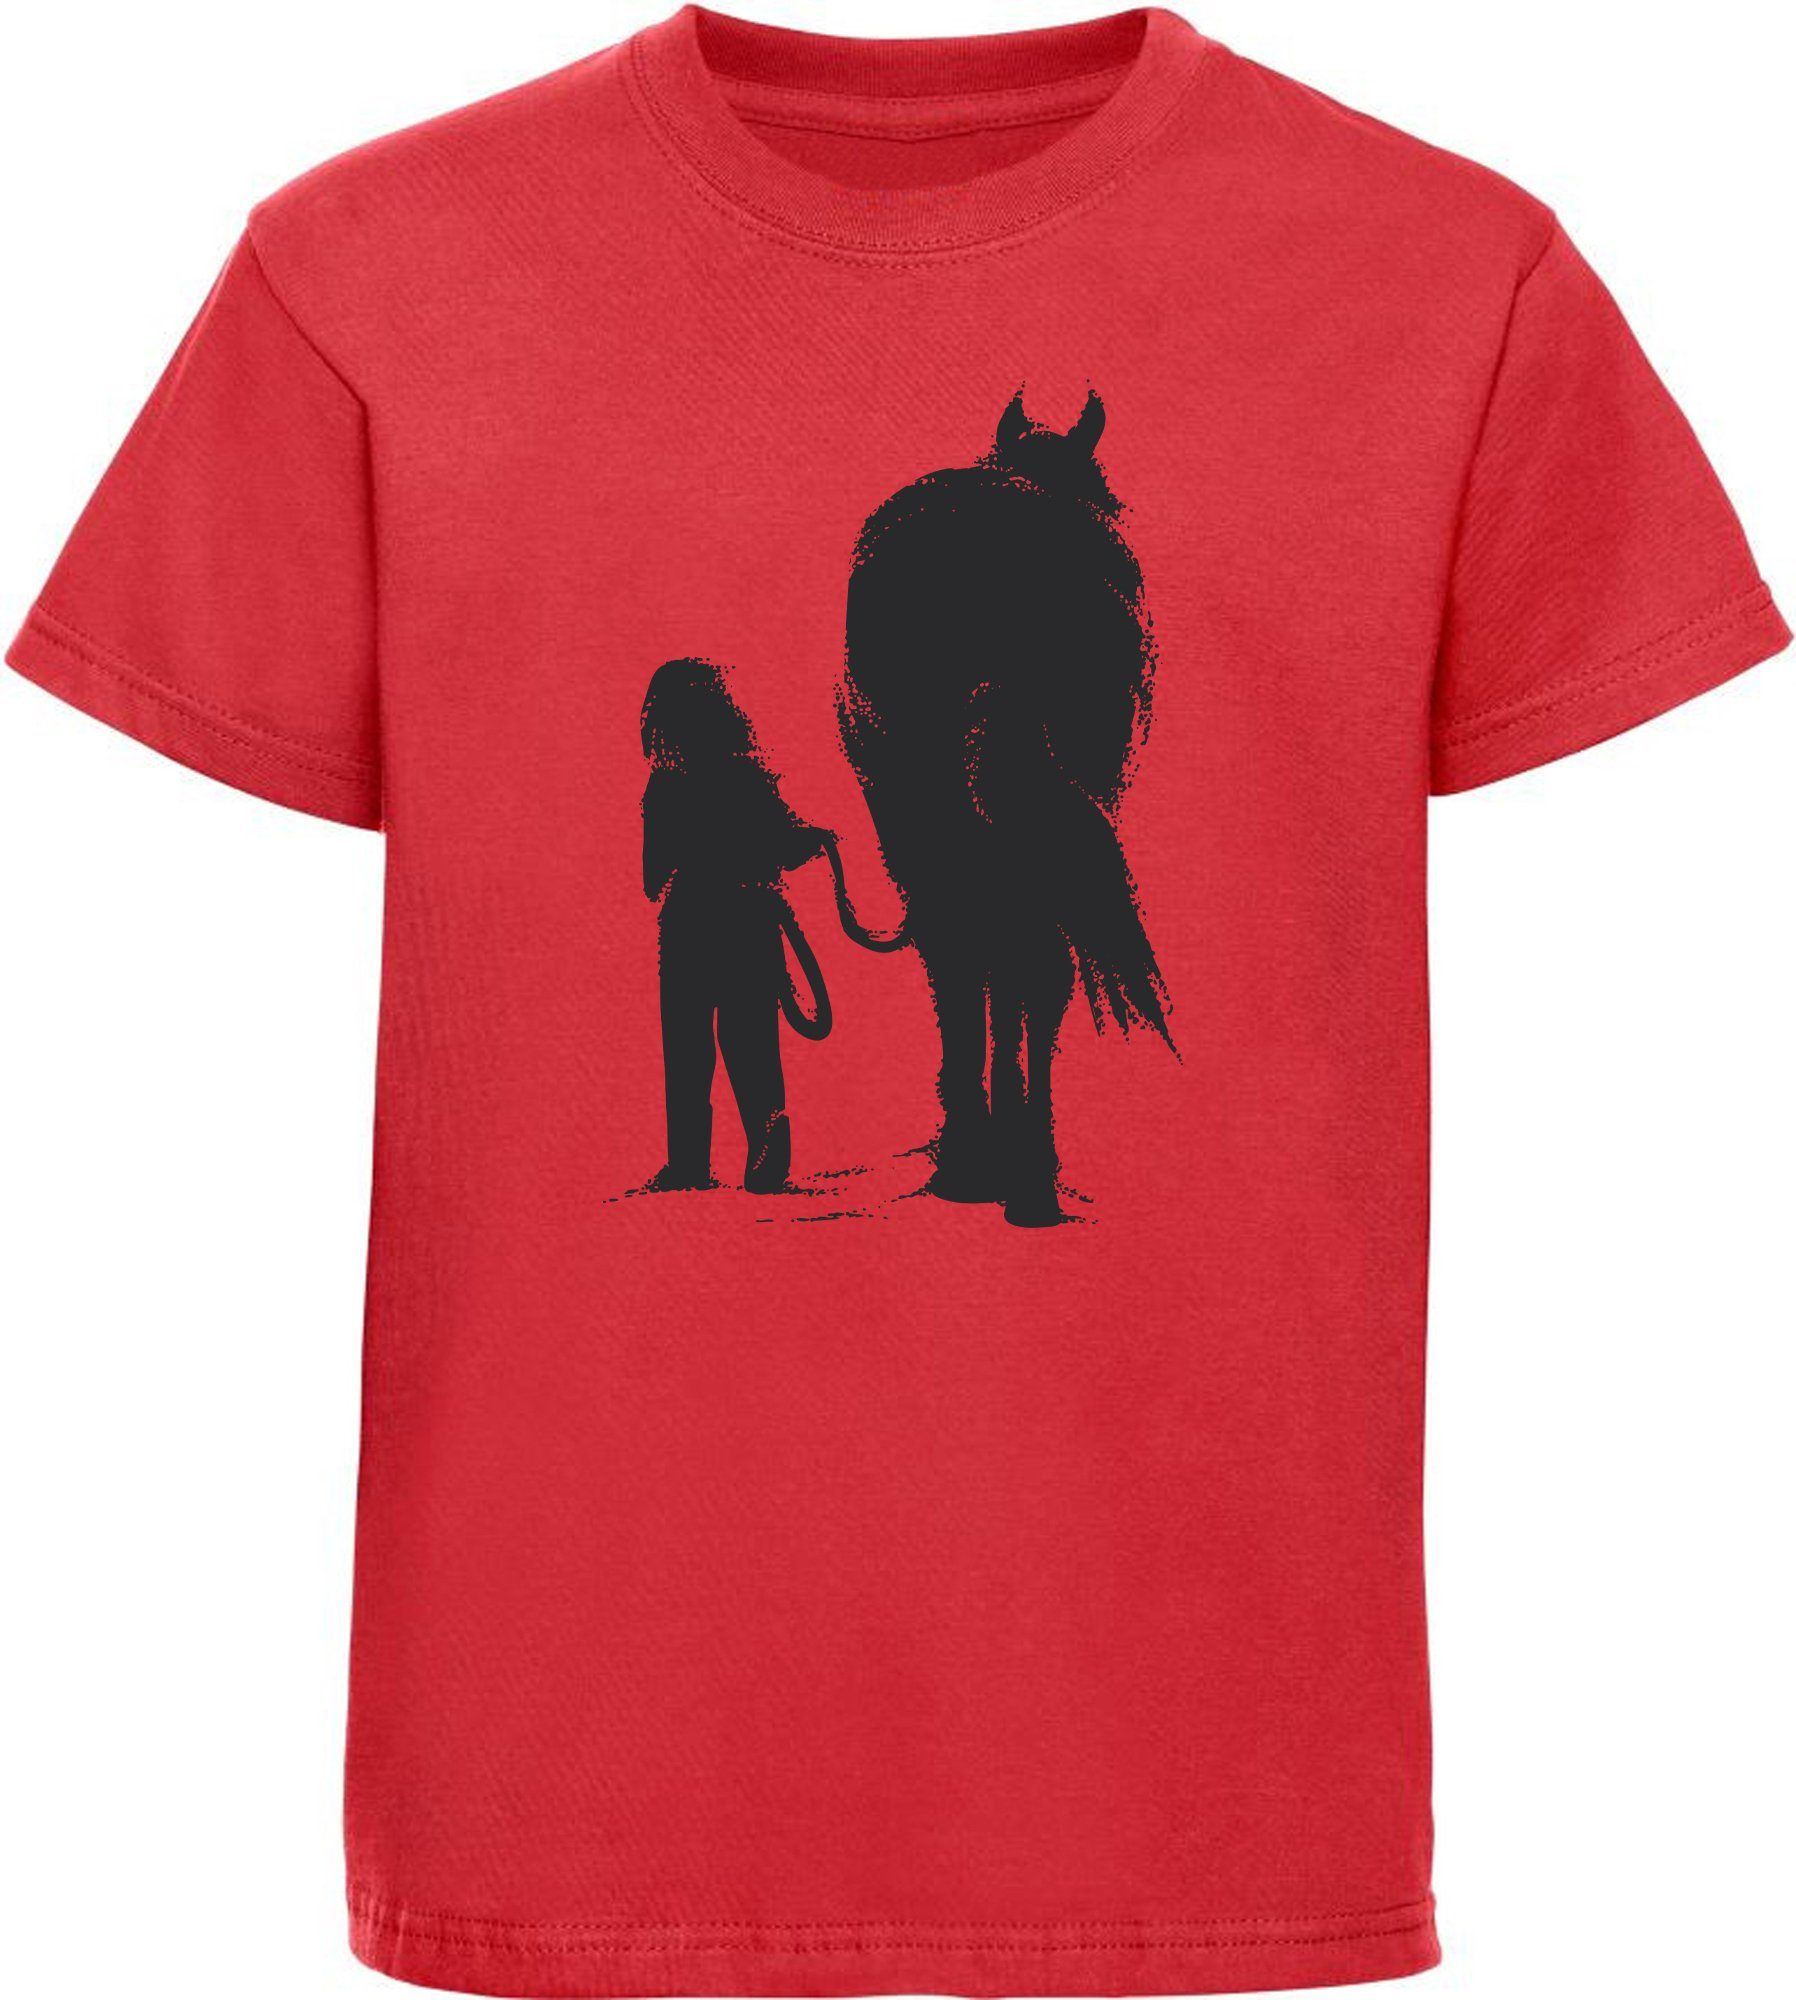 MyDesign24 T-Shirt Kinder Print Shirt bedruckt - Mädchen & Pferd beim Spaziergang Baumwollshirt mit Aufdruck, i250 rot | T-Shirts